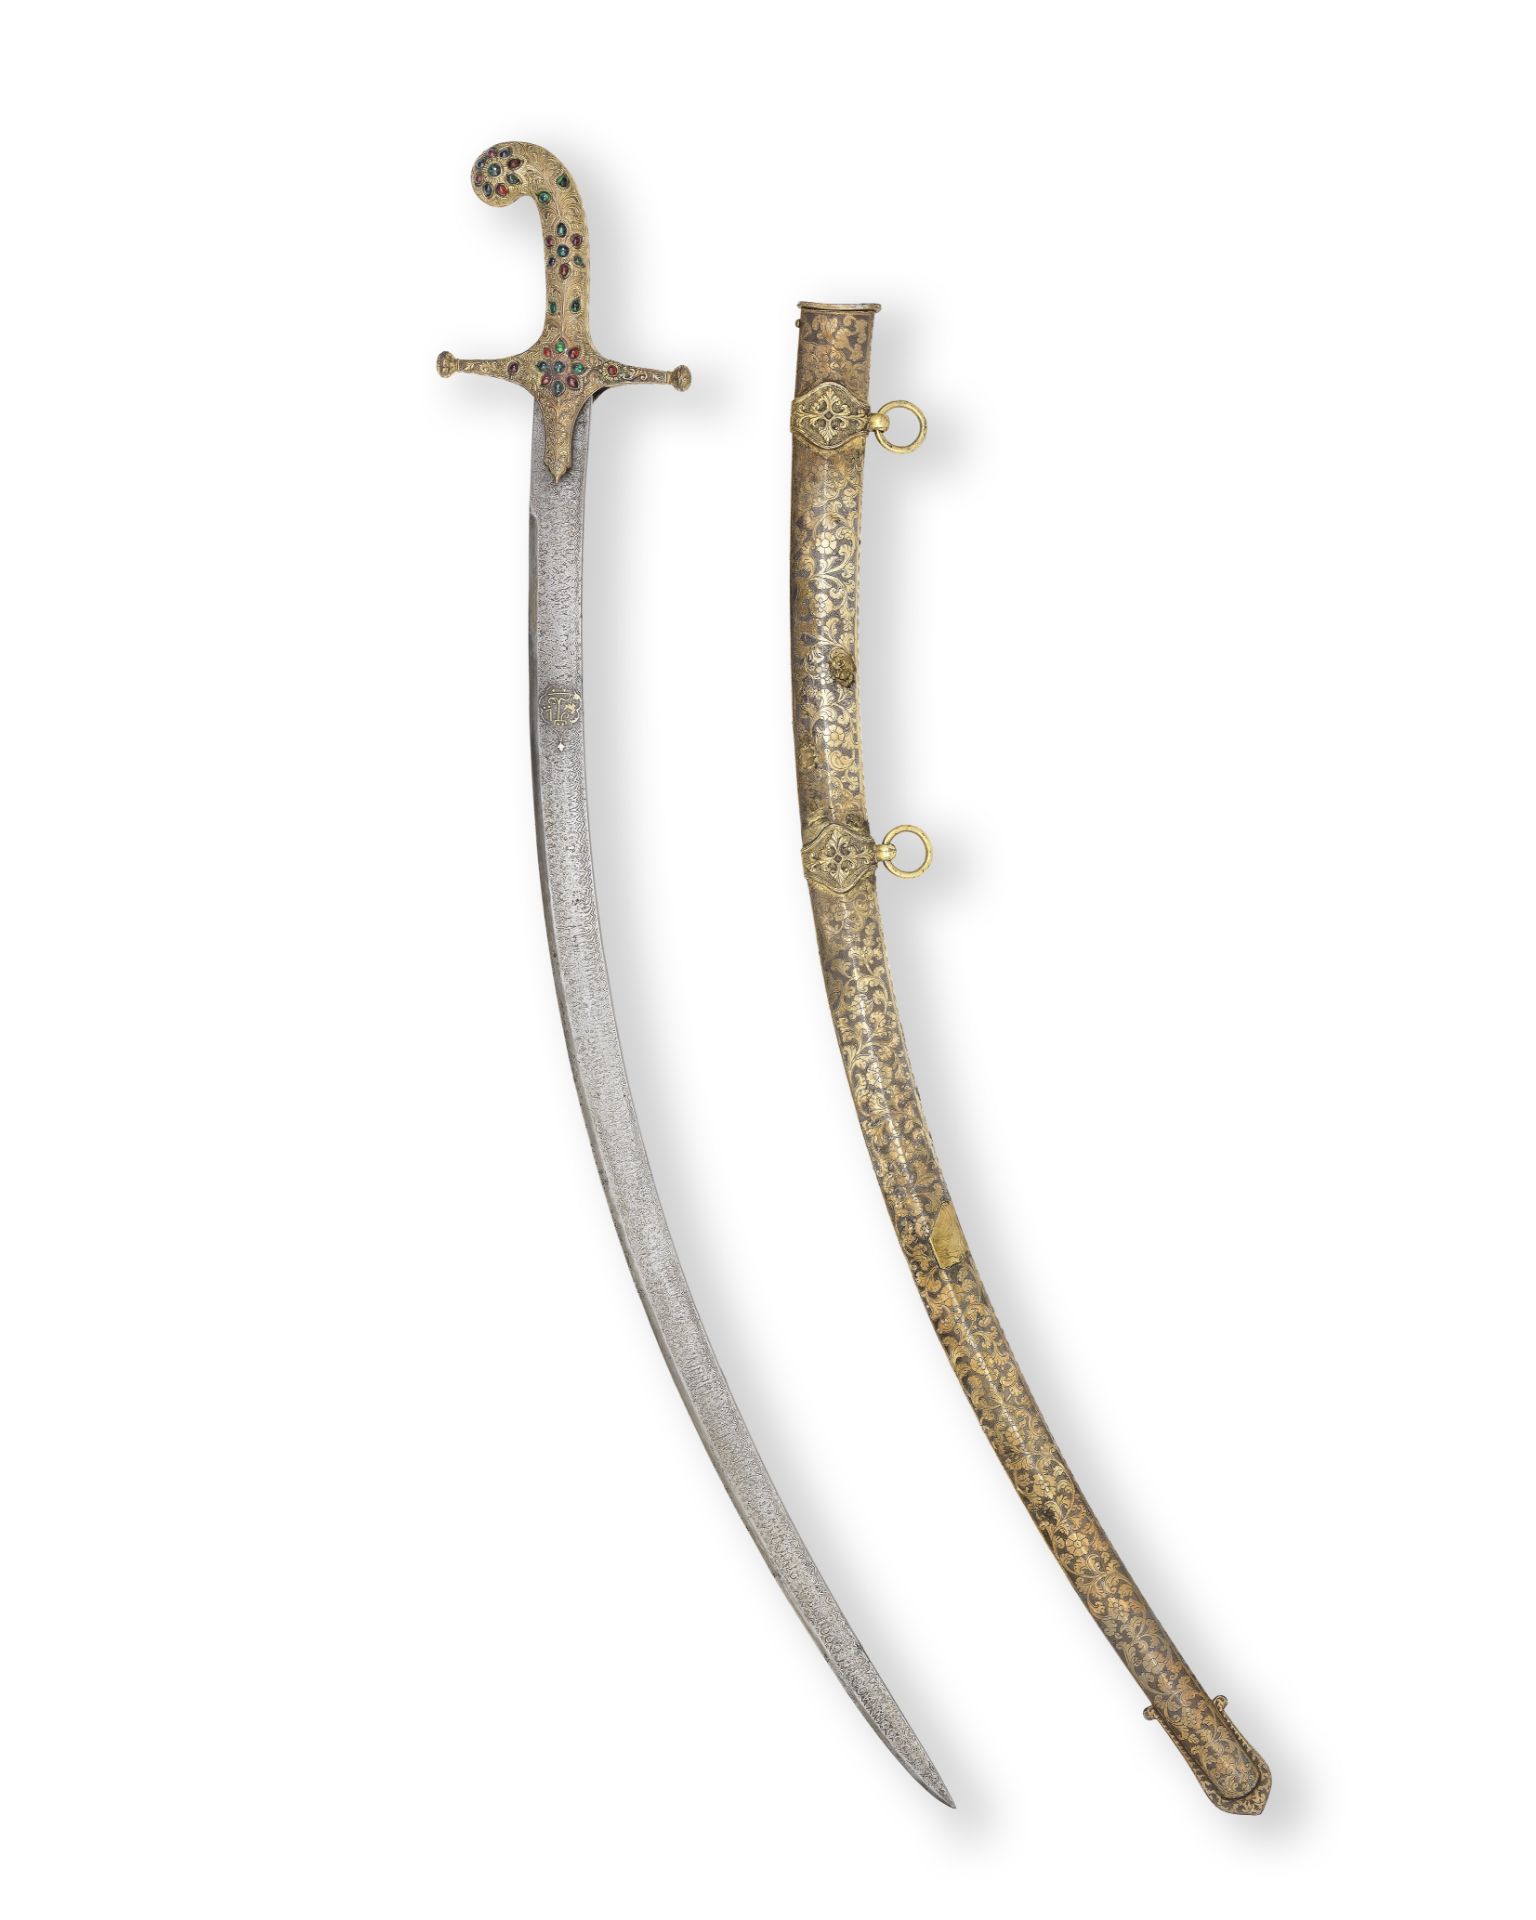 A Kutch silver-gilt mounted steel sword (shamshir) Western India, 19th Century